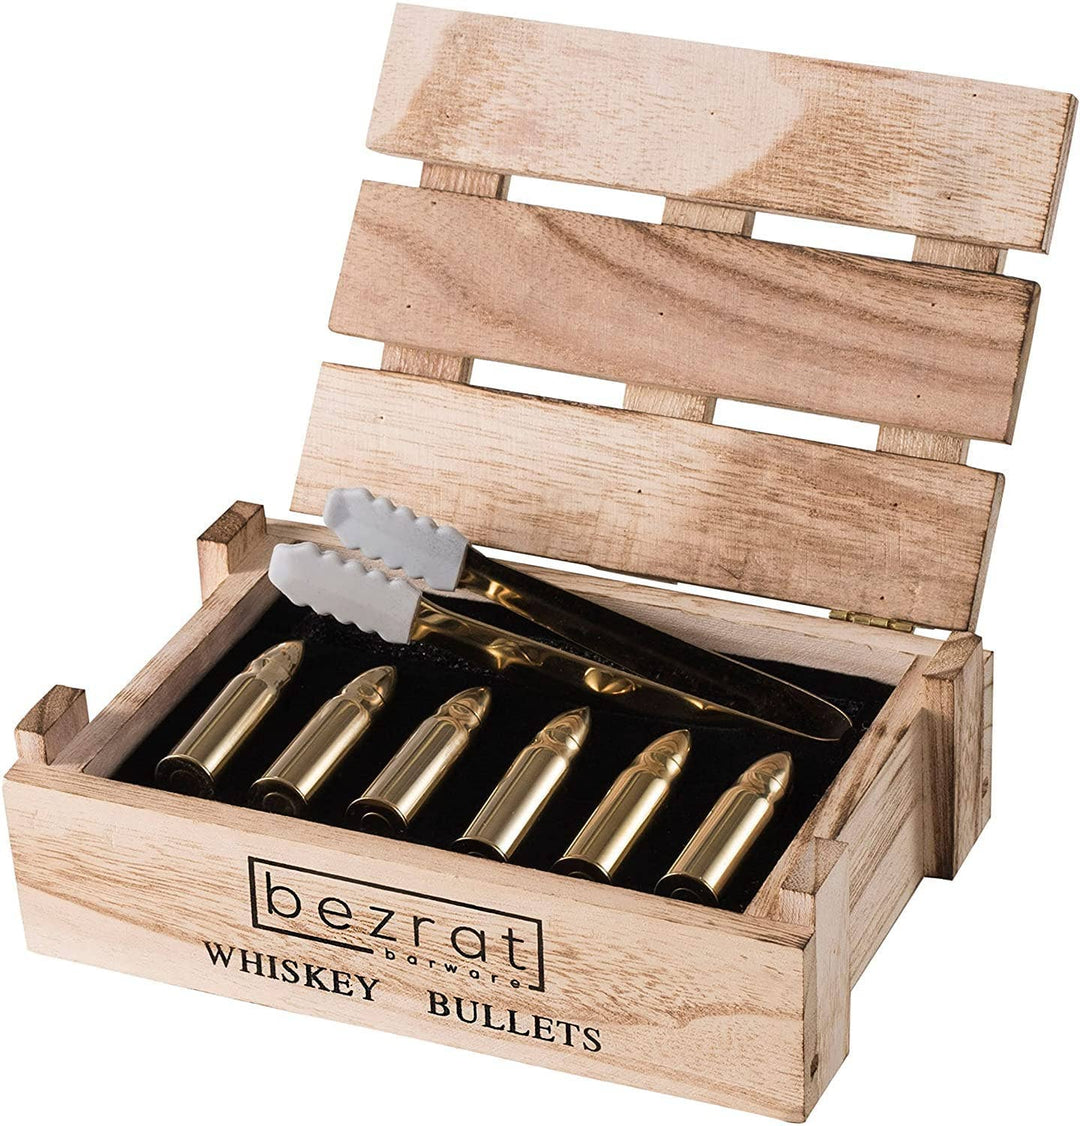 Bezrat - Gold Bullet Stones Wood Box Set